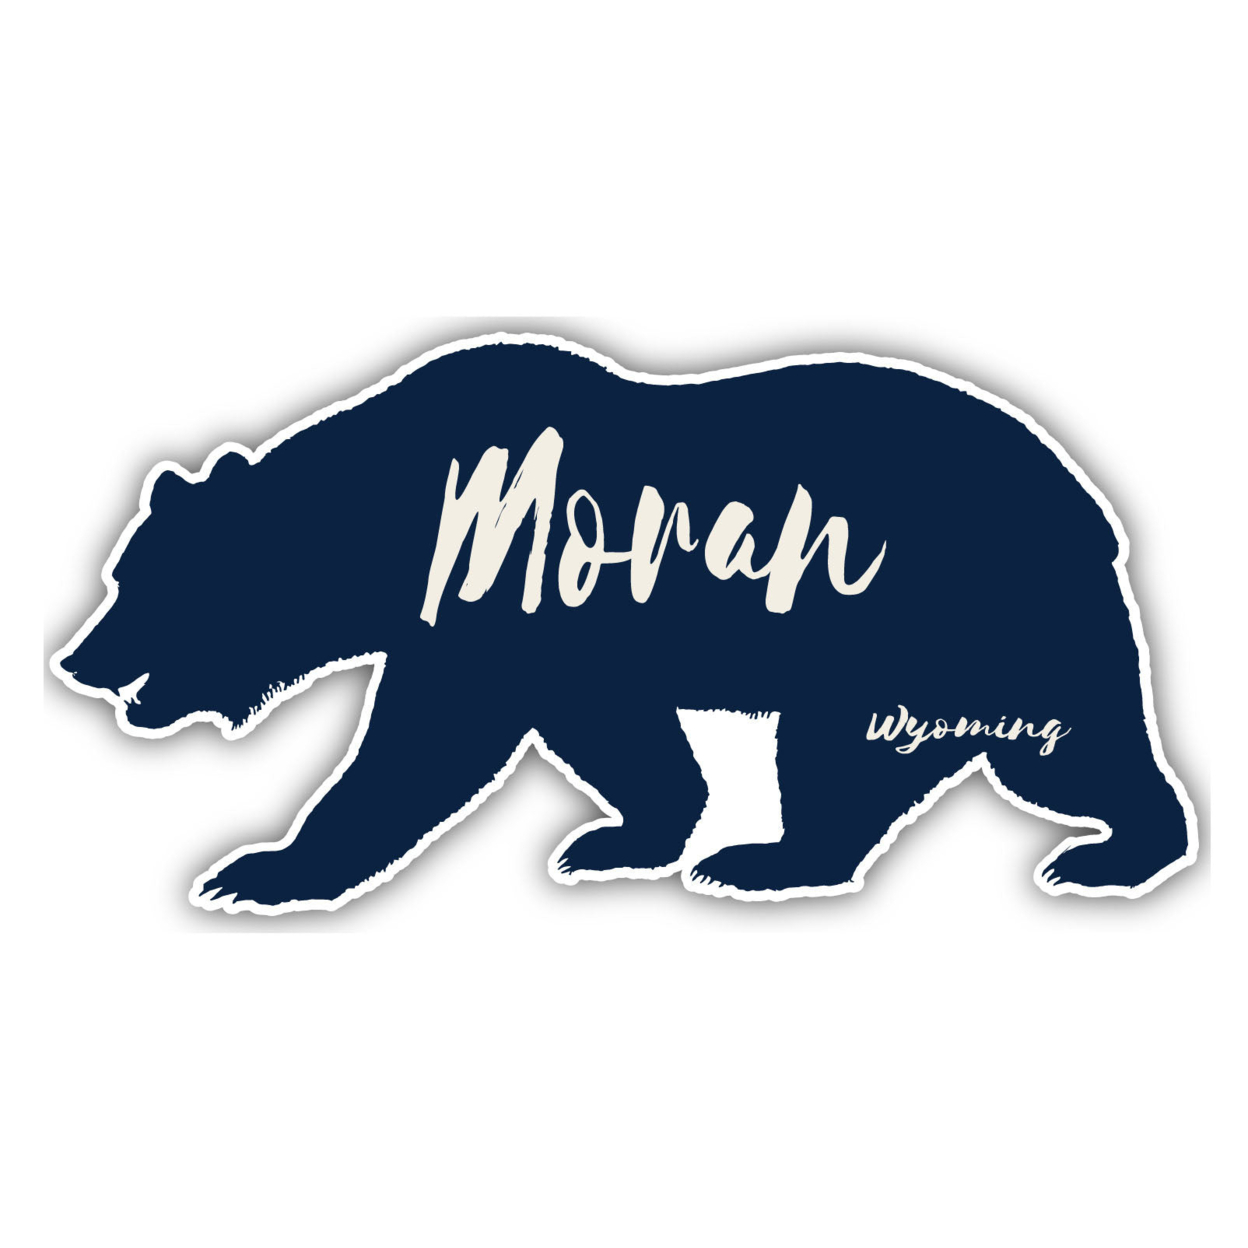 Moran Wyoming Souvenir Decorative Stickers (Choose Theme And Size) - Single Unit, 2-Inch, Bear